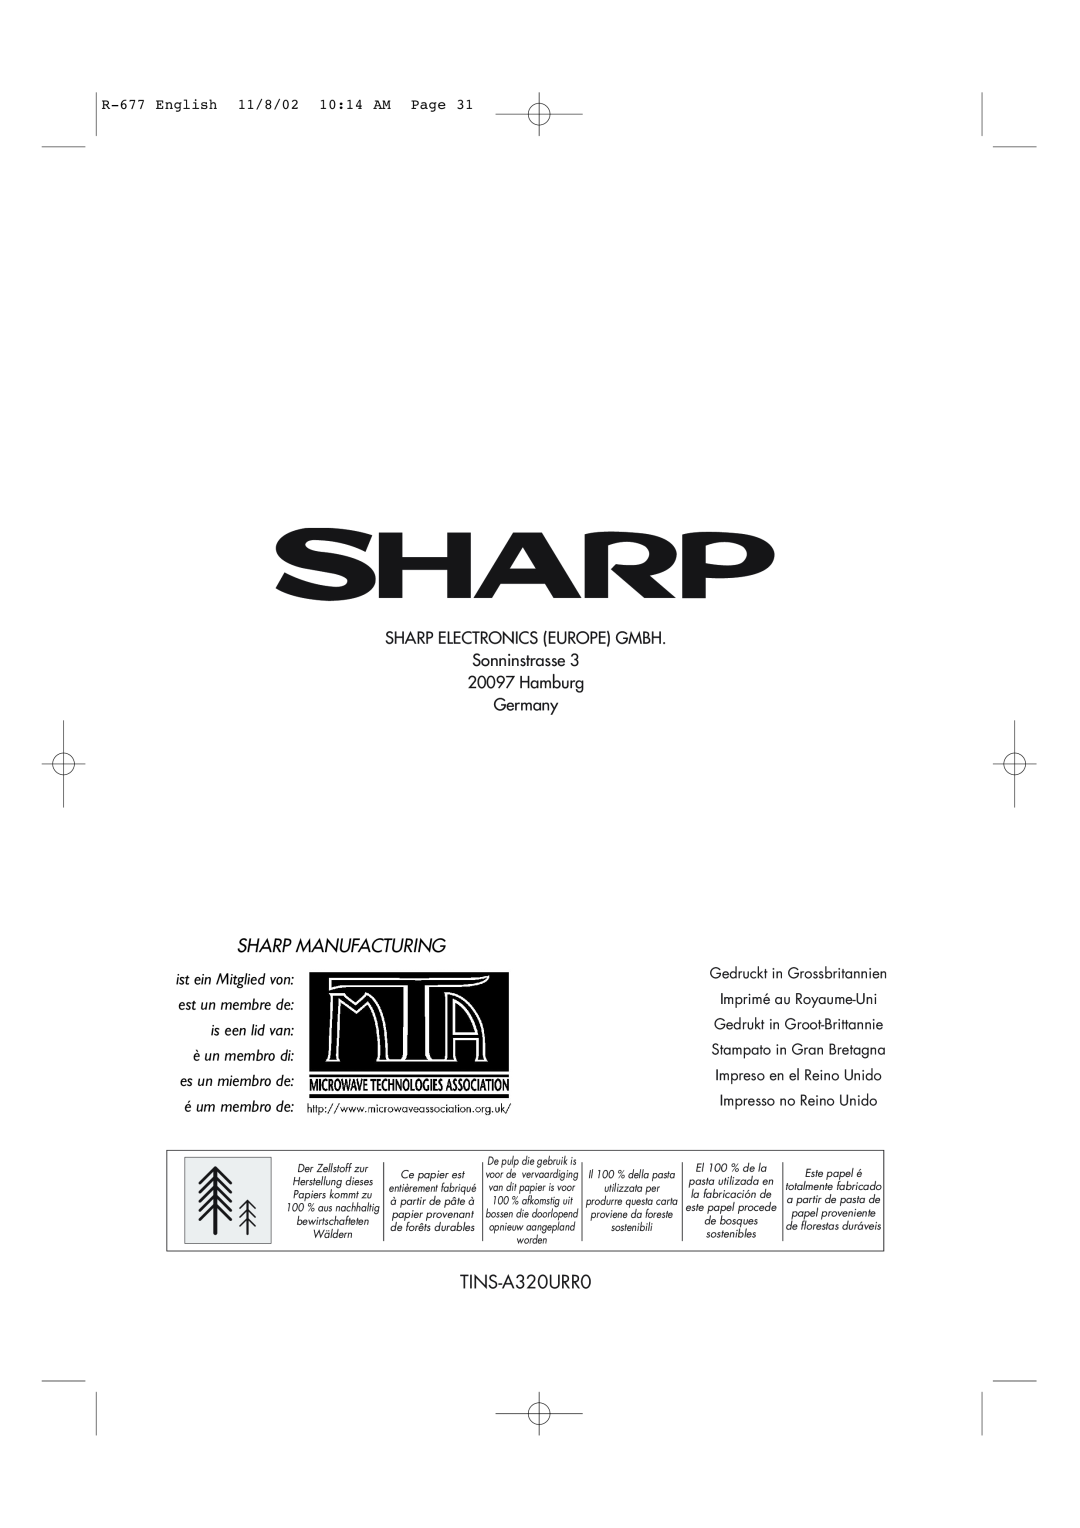 Sharp R-677F Sharp Manufacturing, éum membro de, R-677English 11/8/02 10 14 AM Page, èun membro di es un miembro de 